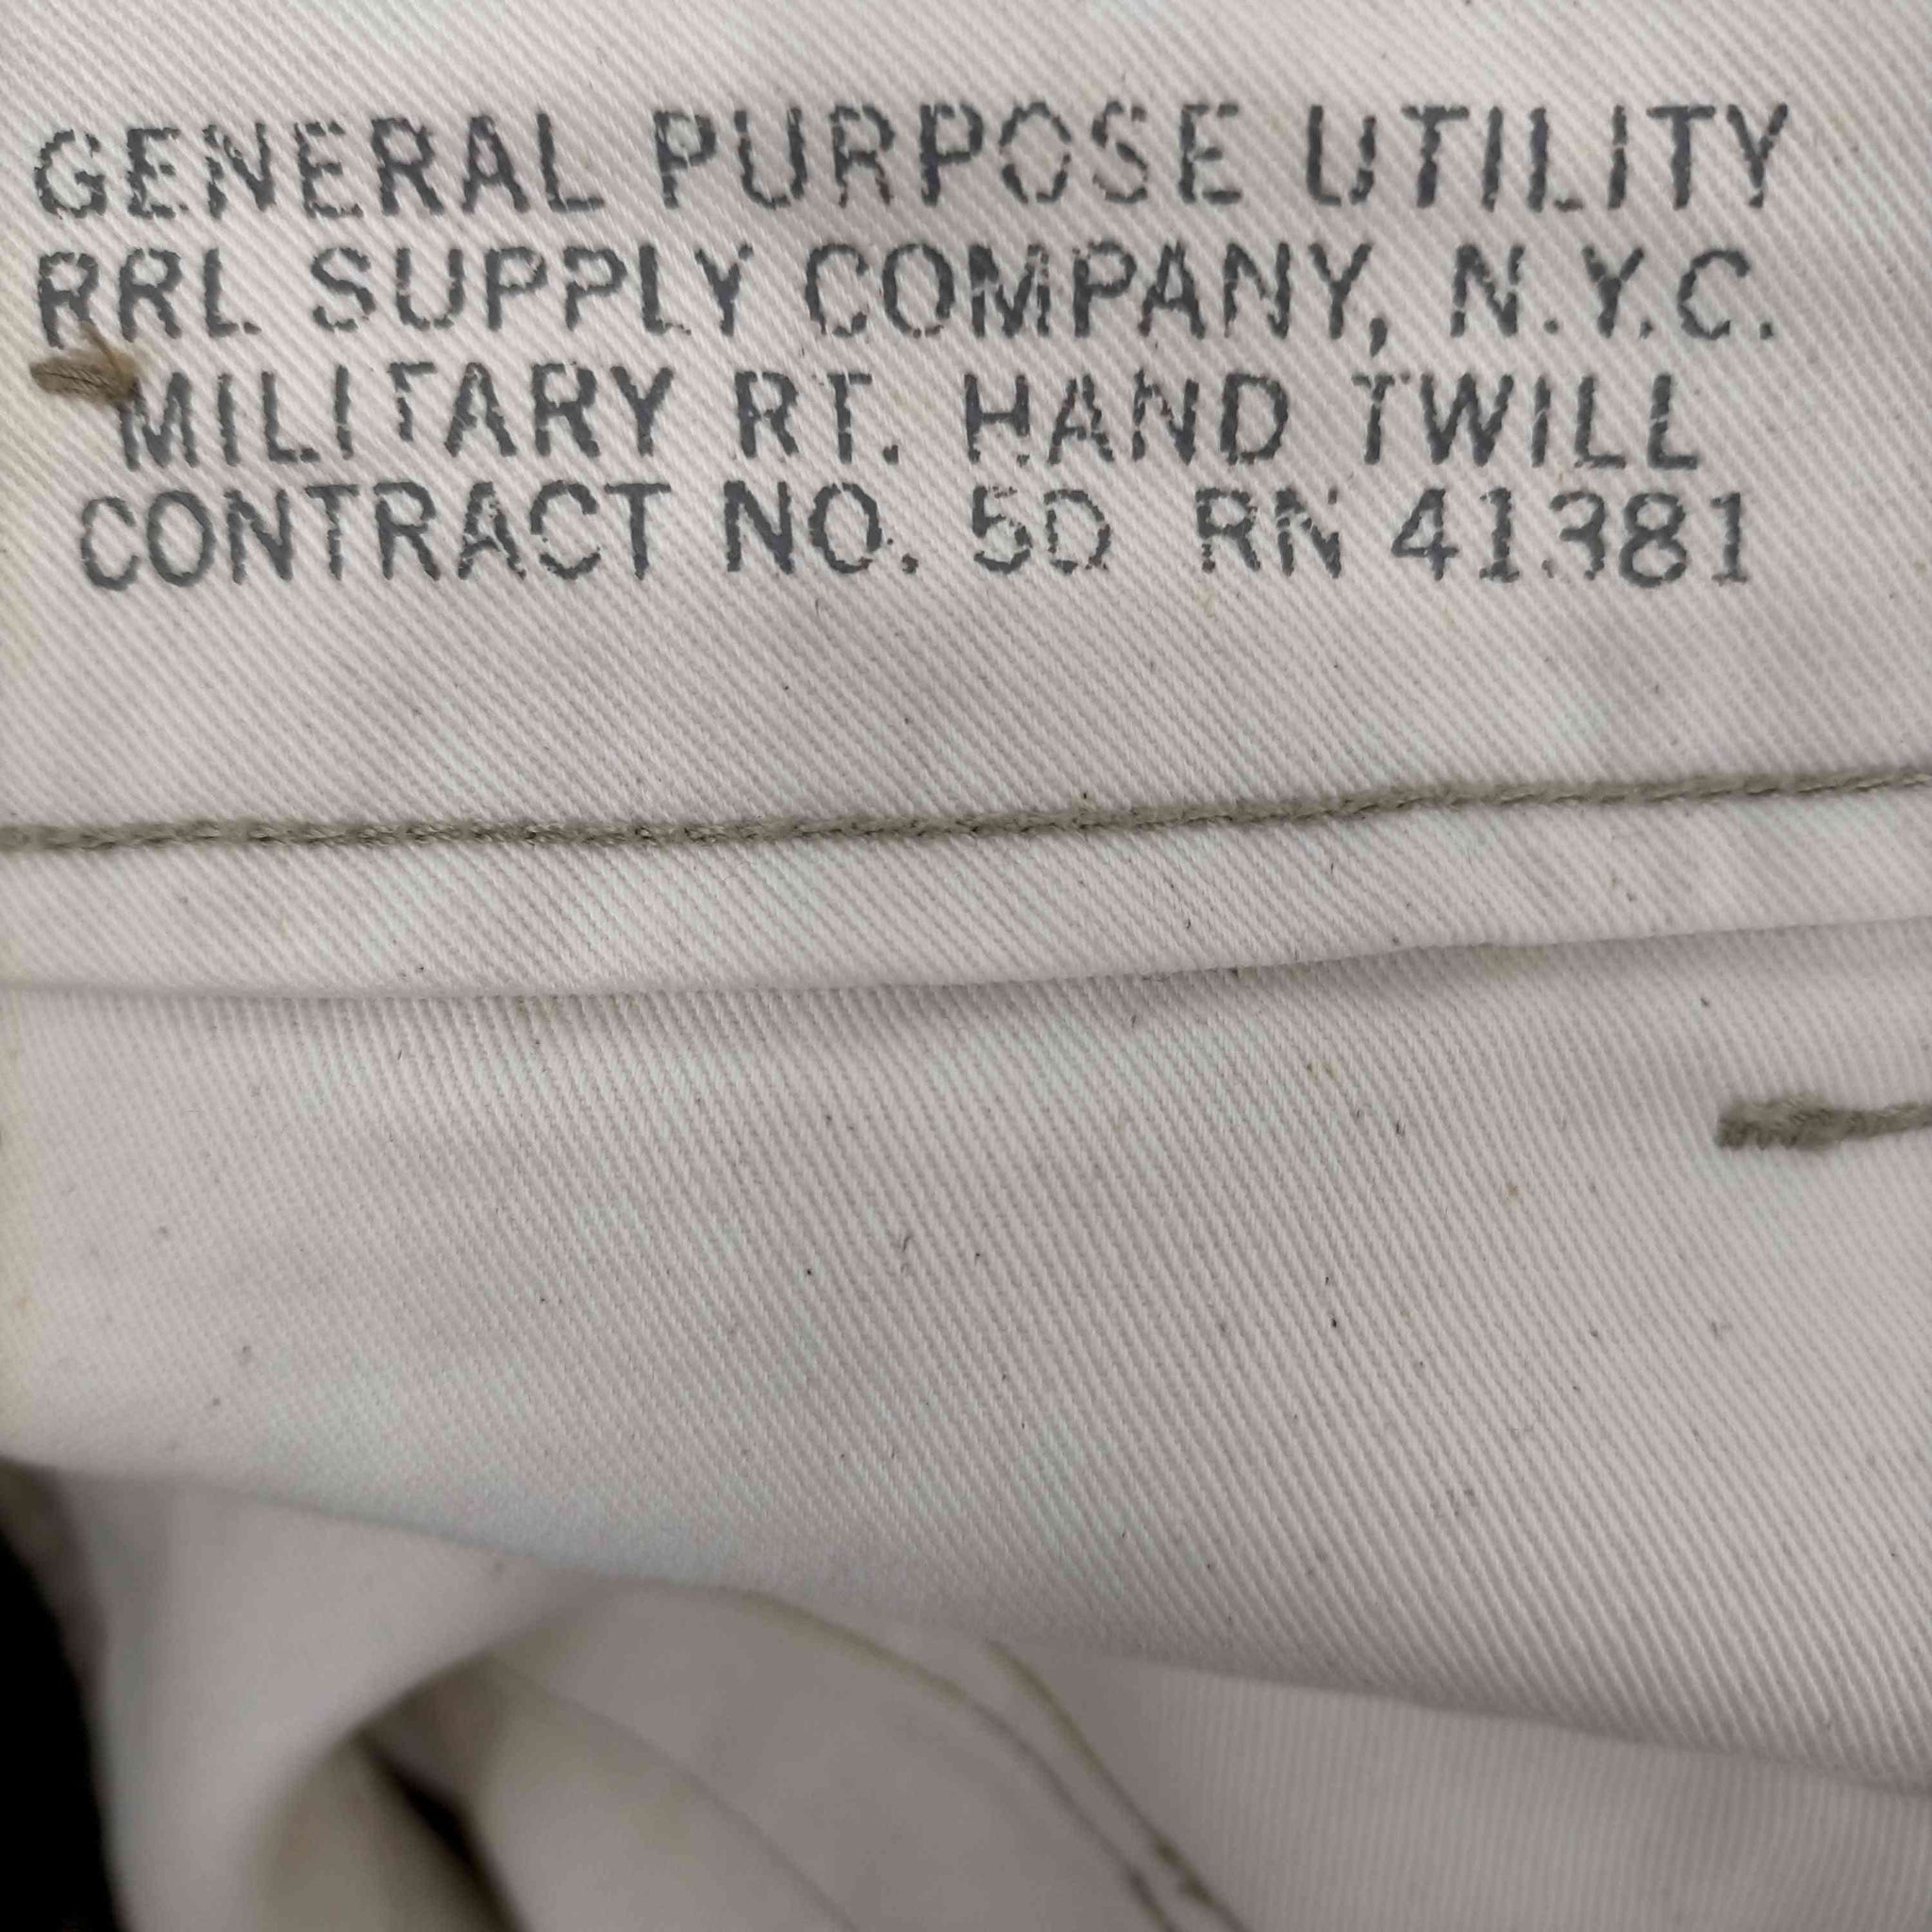 RRL RALPH LAUREN(ダブルアールエル ラルフローレン)Military Right Hand Twill Utility Pants